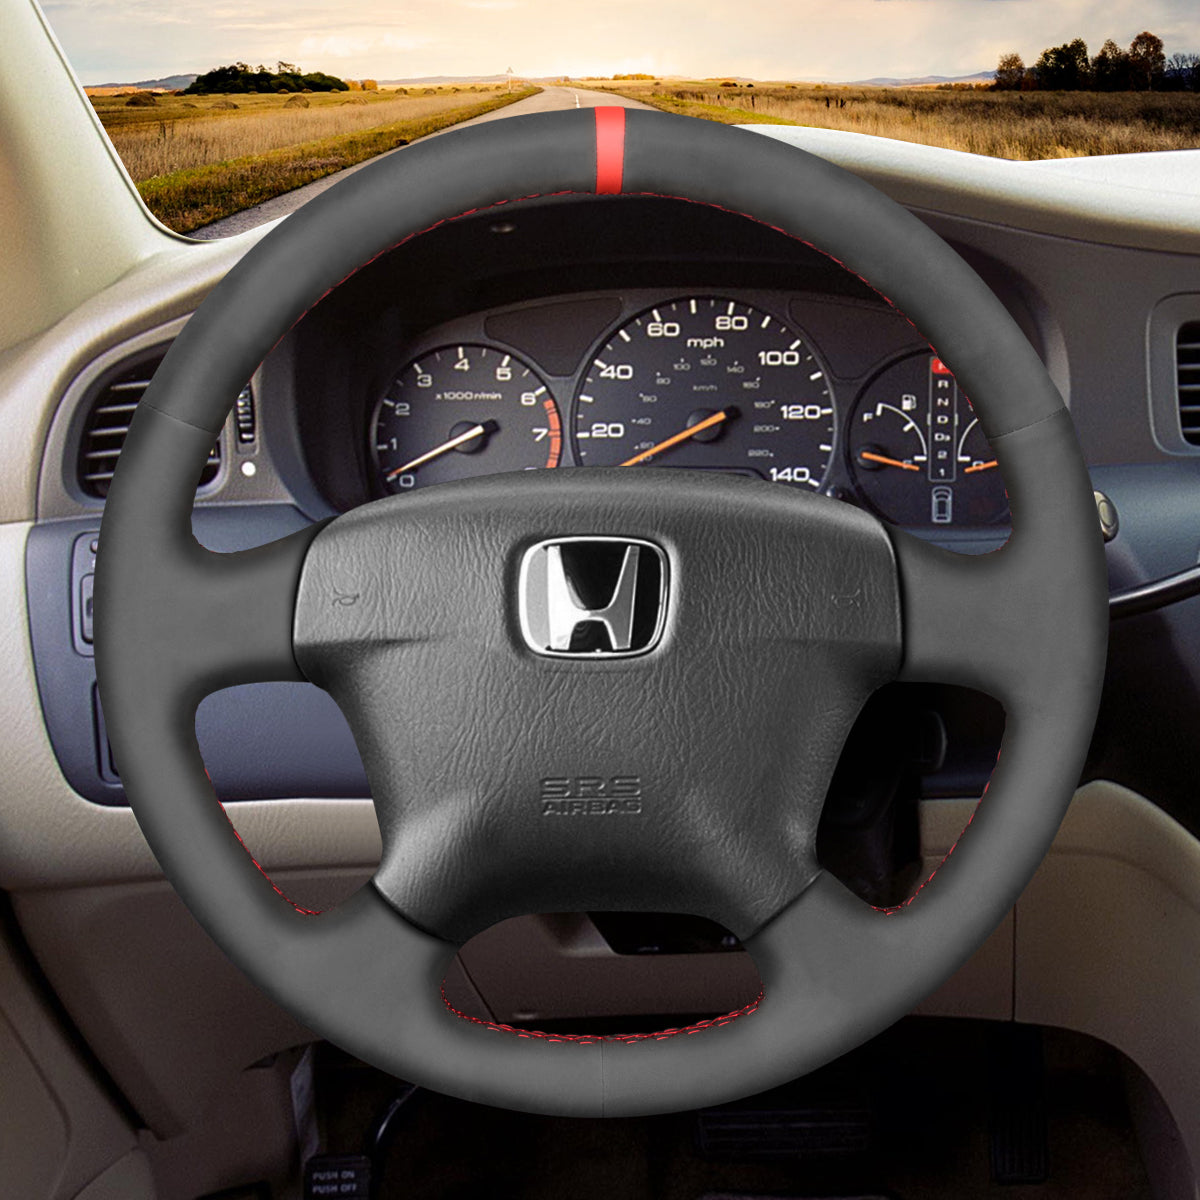 MEWANT Car Steering Wheel Cover for Honda Civic Odyssey Stream